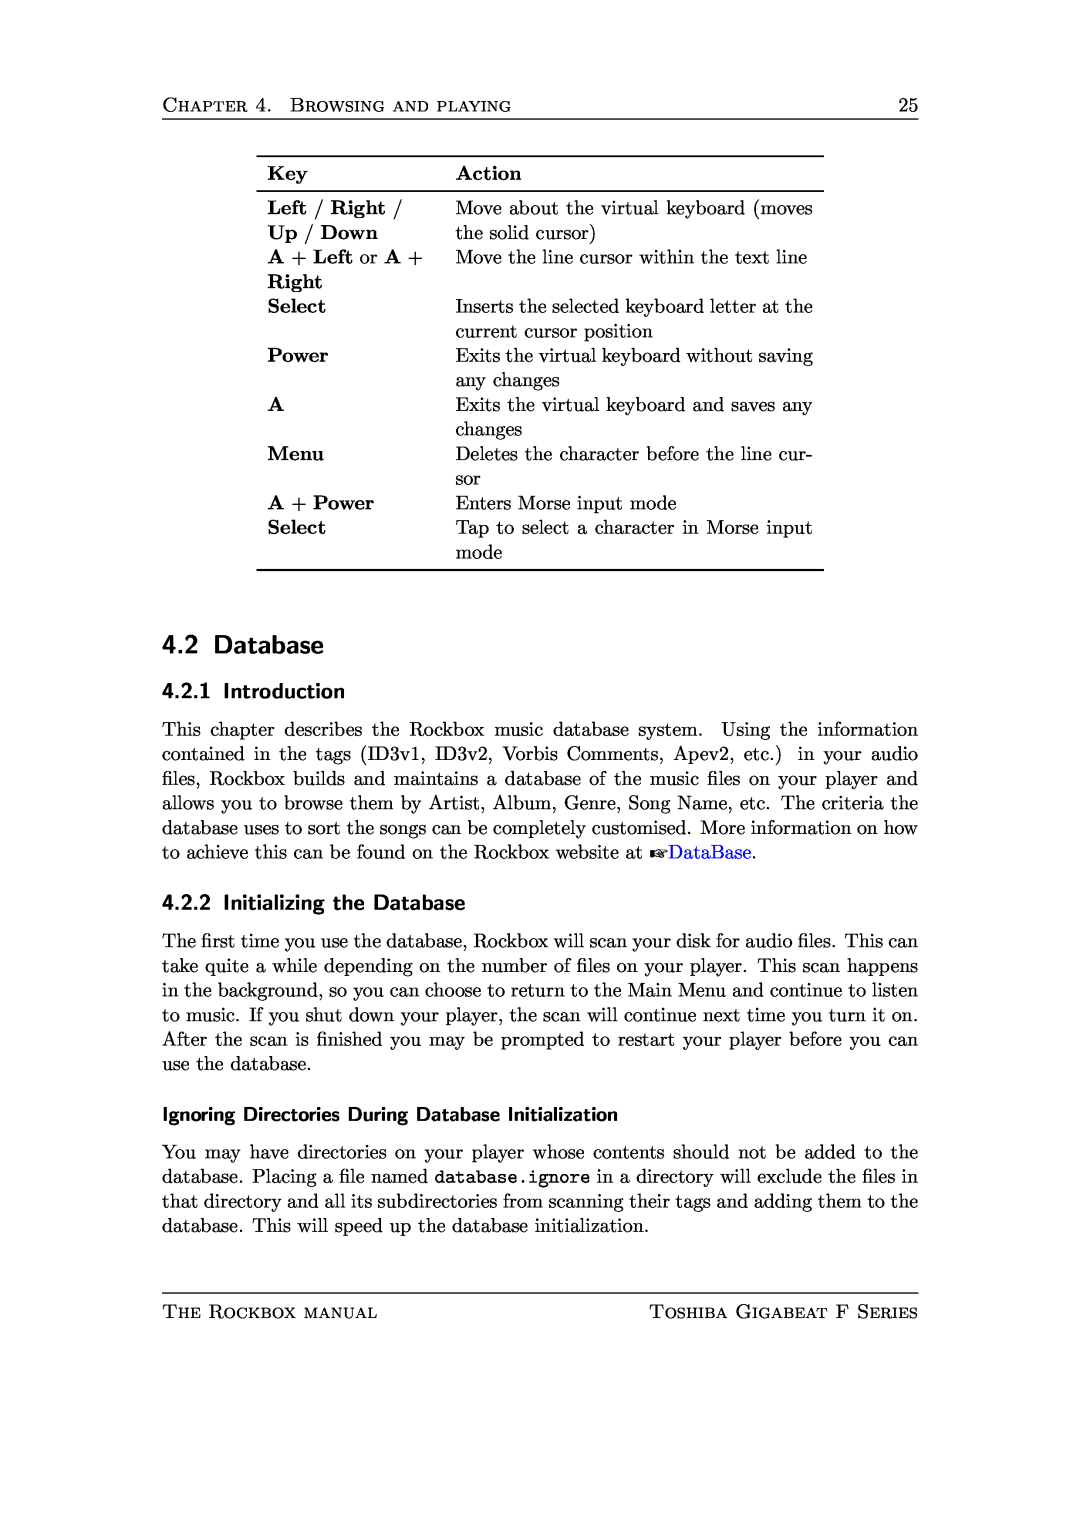 Toshiba F Series manual Introduction, Initializing the Database 